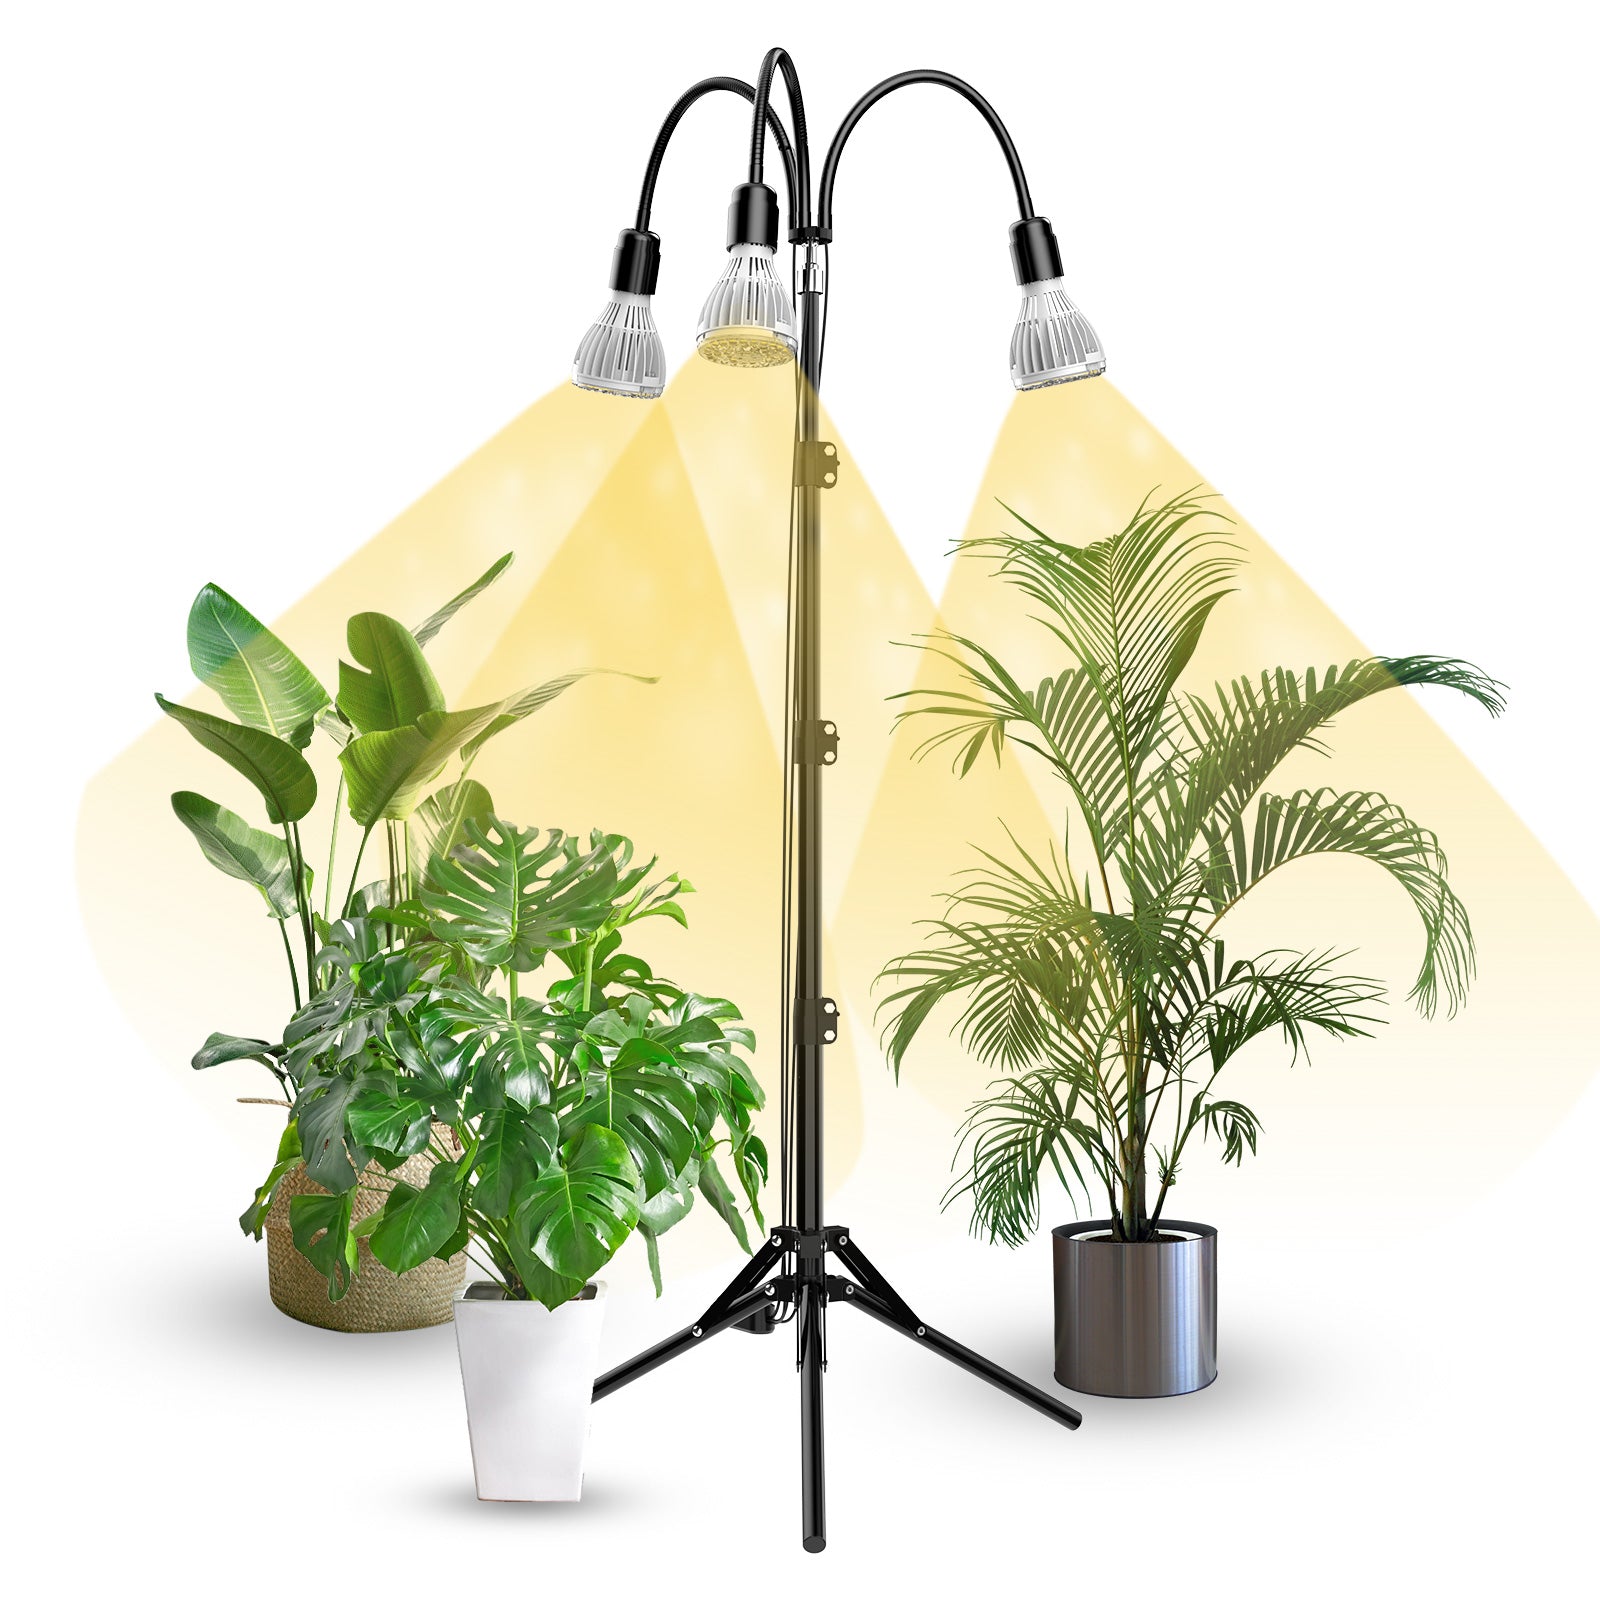 90W Grow Light with Adjustable Tripod Stand